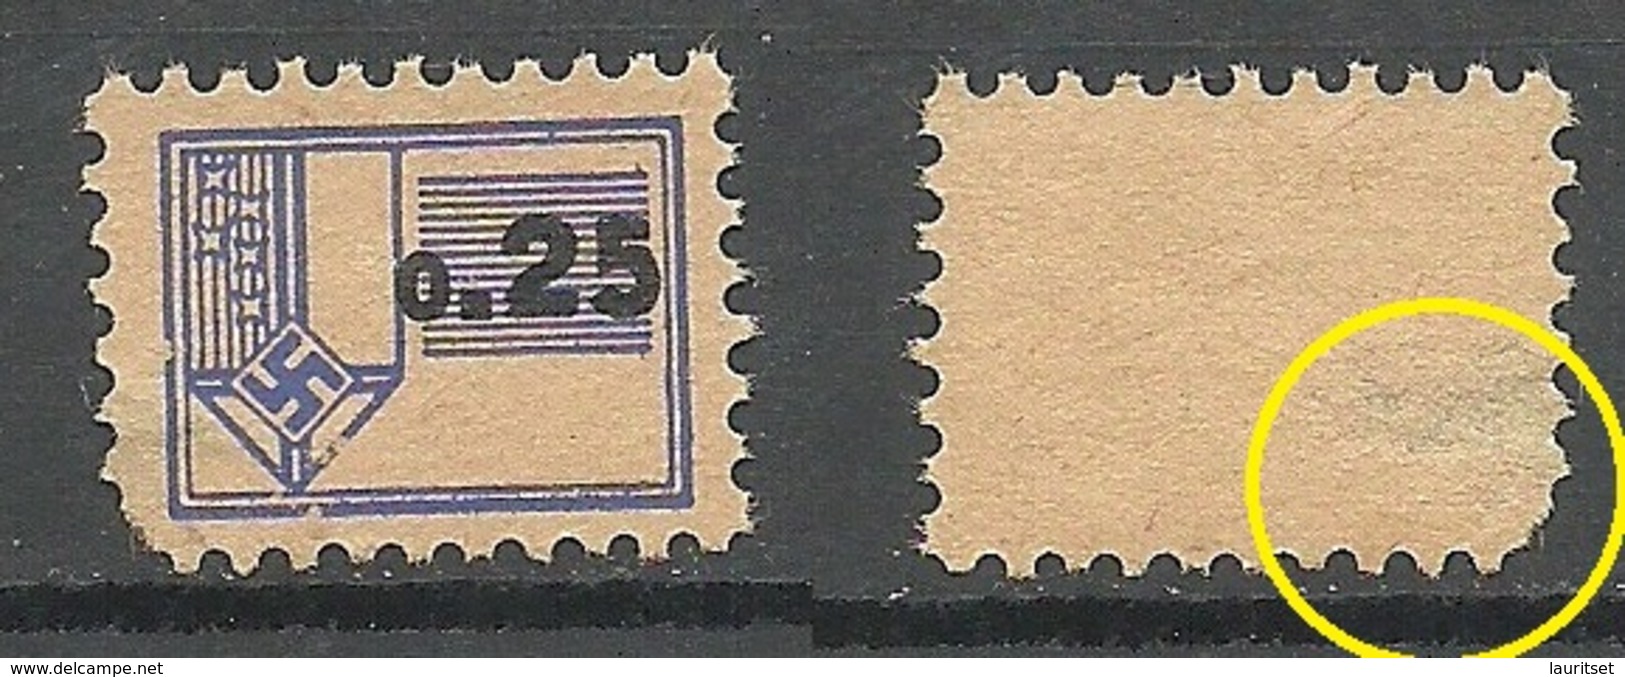 Germany Reich 1930ies Nazi Swastika Revenue Tax Stamp NB! Damaged Corner & Light Thin! - Cinderellas